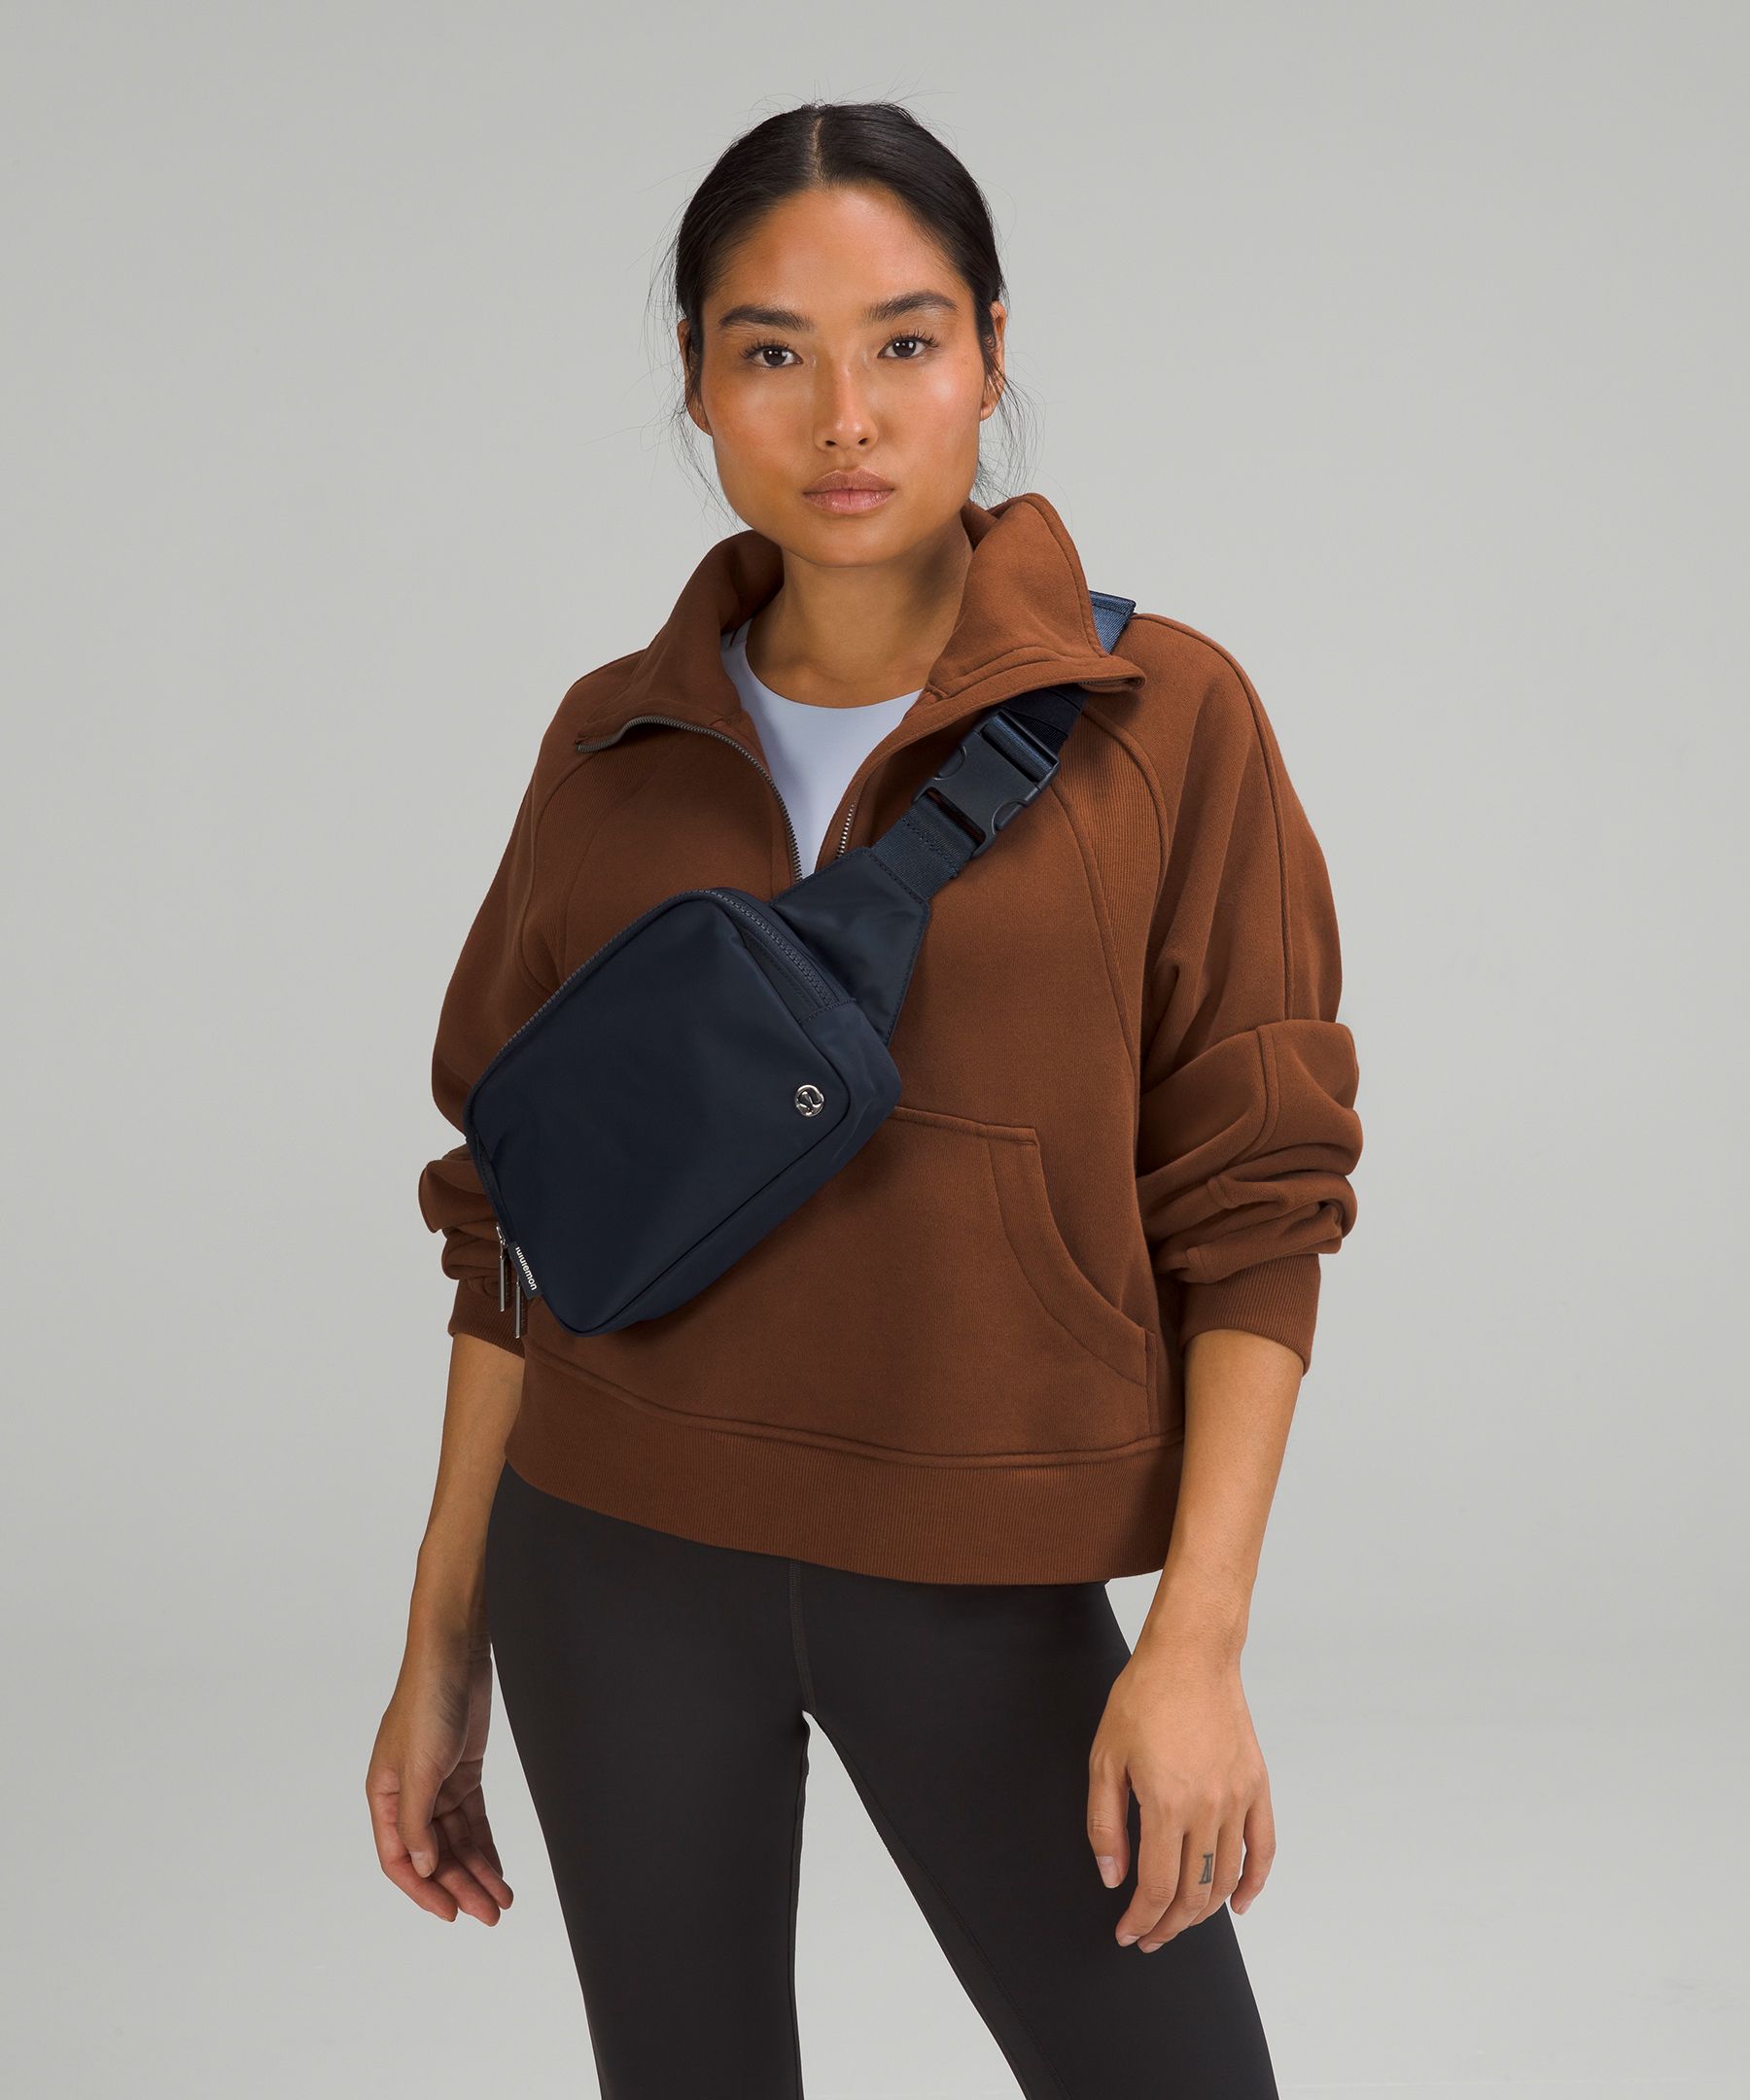 Lululemon Everywhere Belt Bag  Plus Size Body 16-18 (Apple Shape